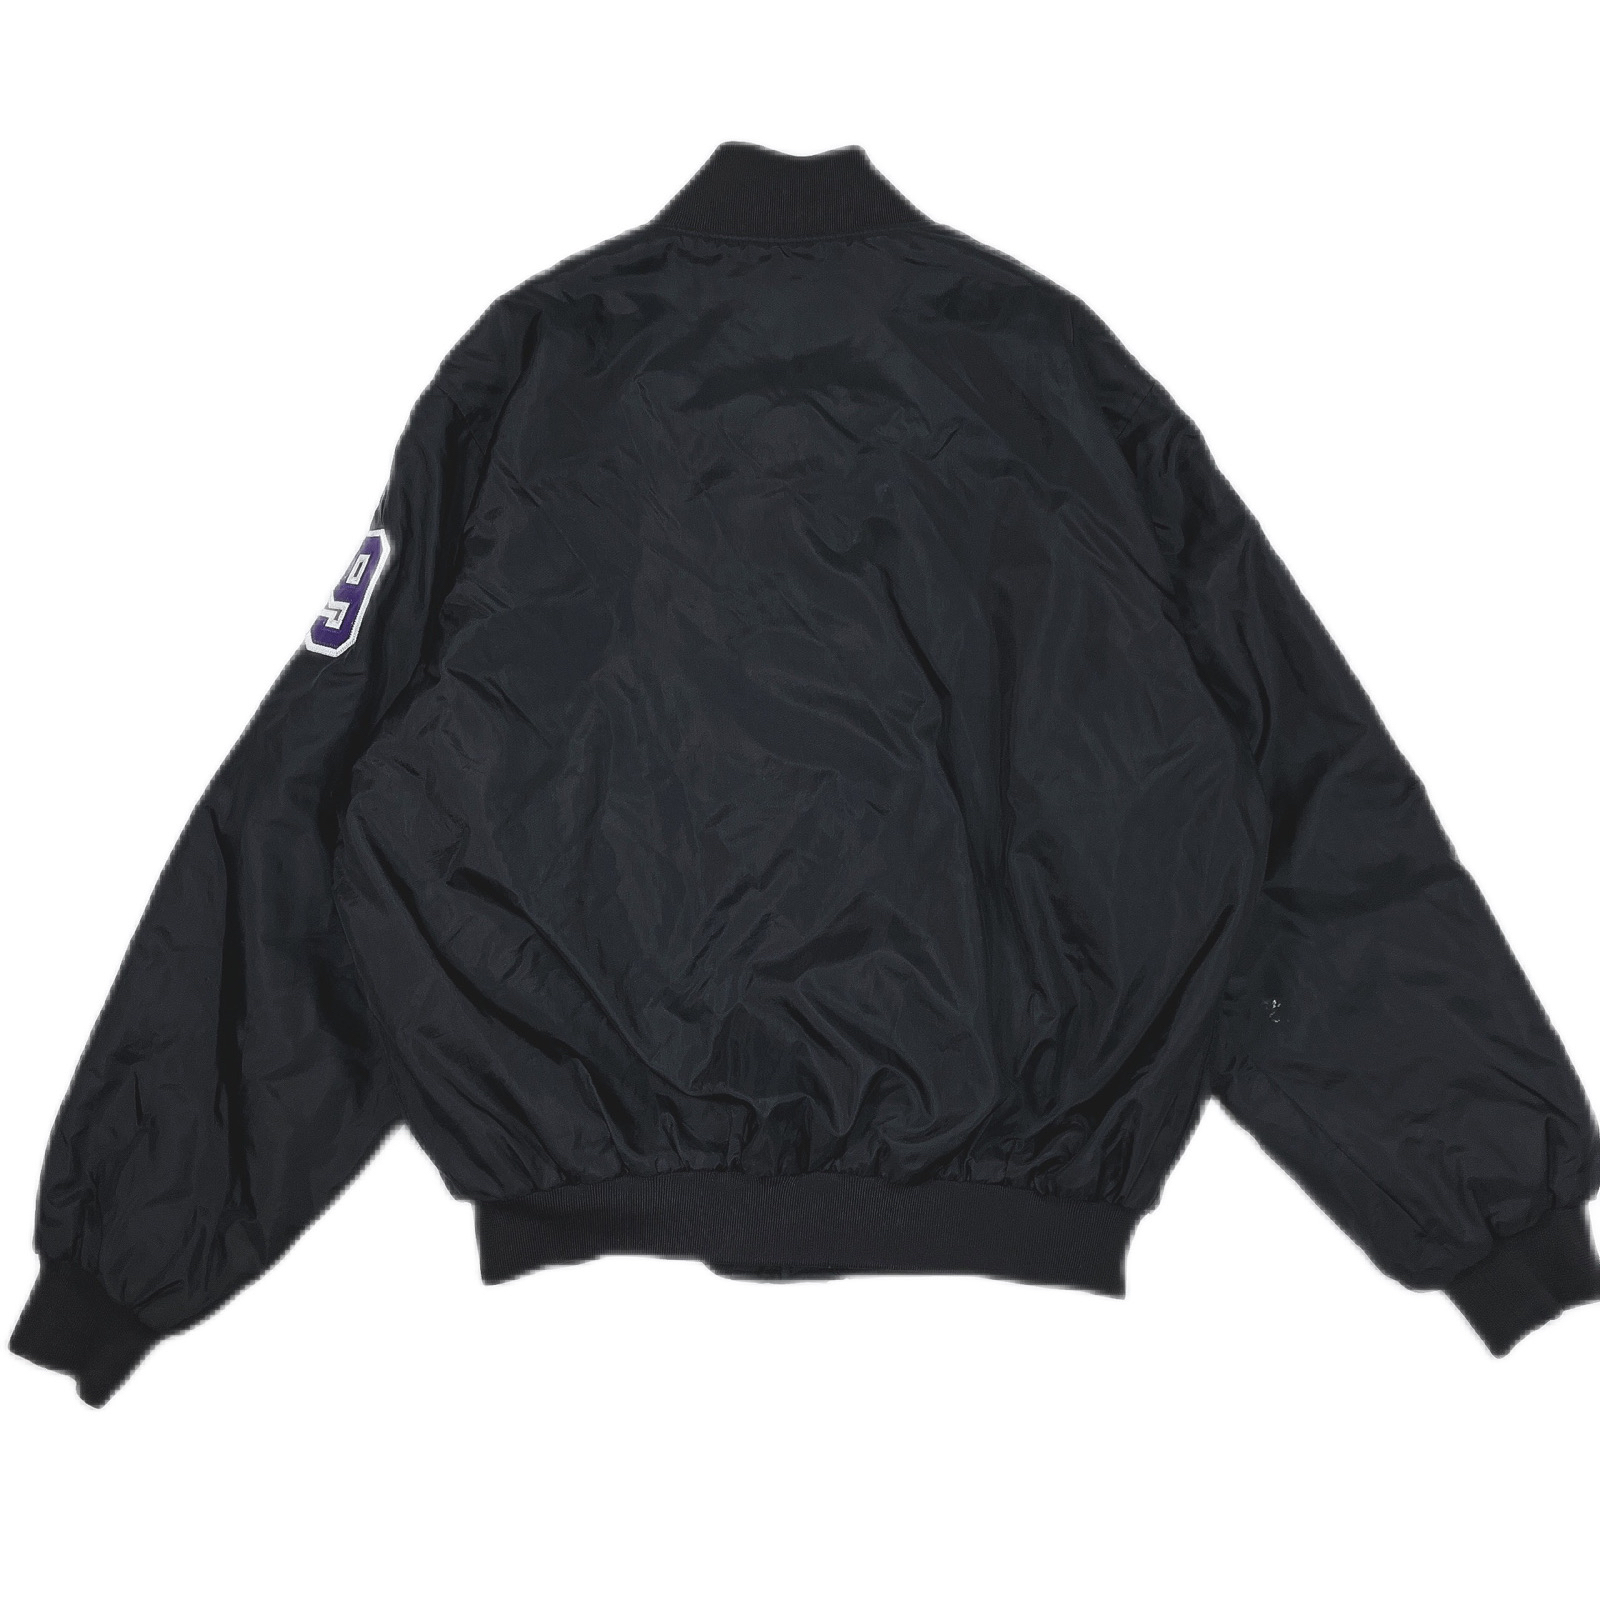 Msize FRANKLIN stadium jacket